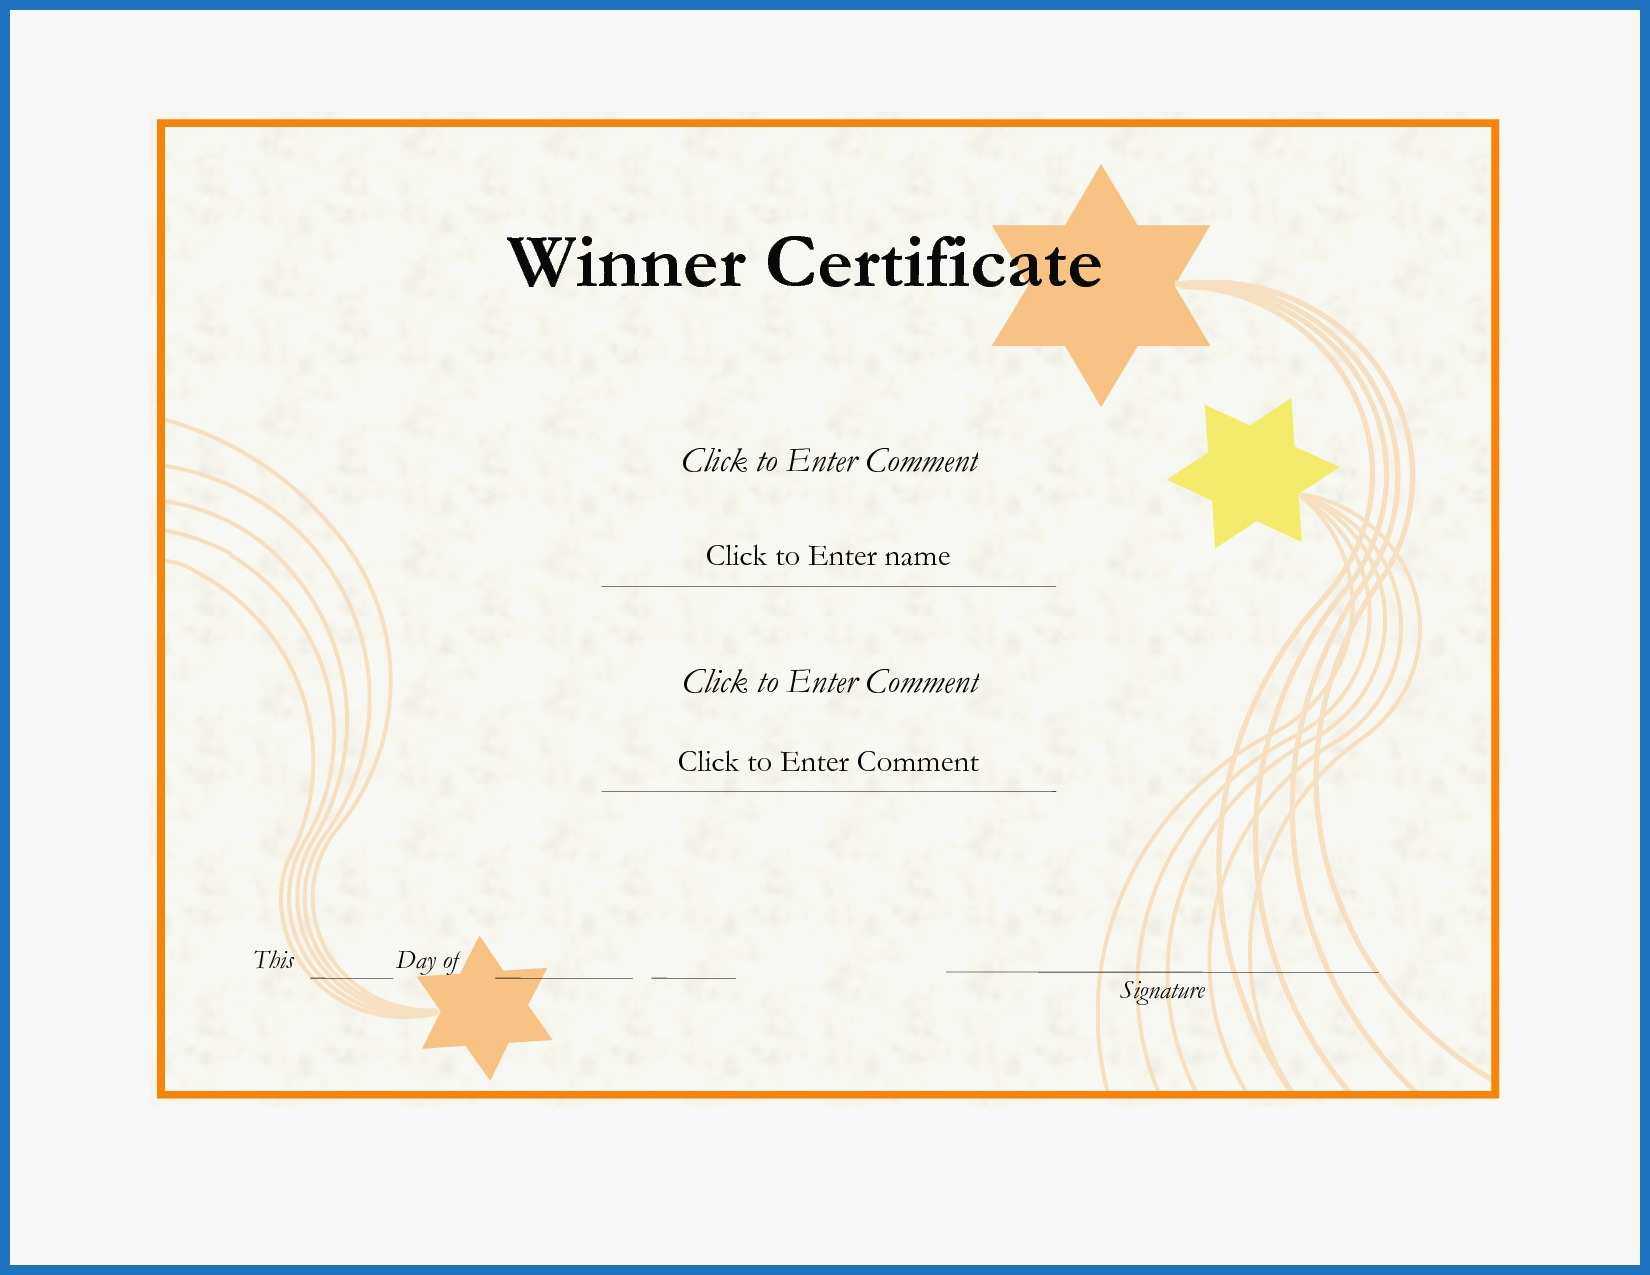 Winner Certificate Template Fresh Blank Certificates With Regard To Winner Certificate Template